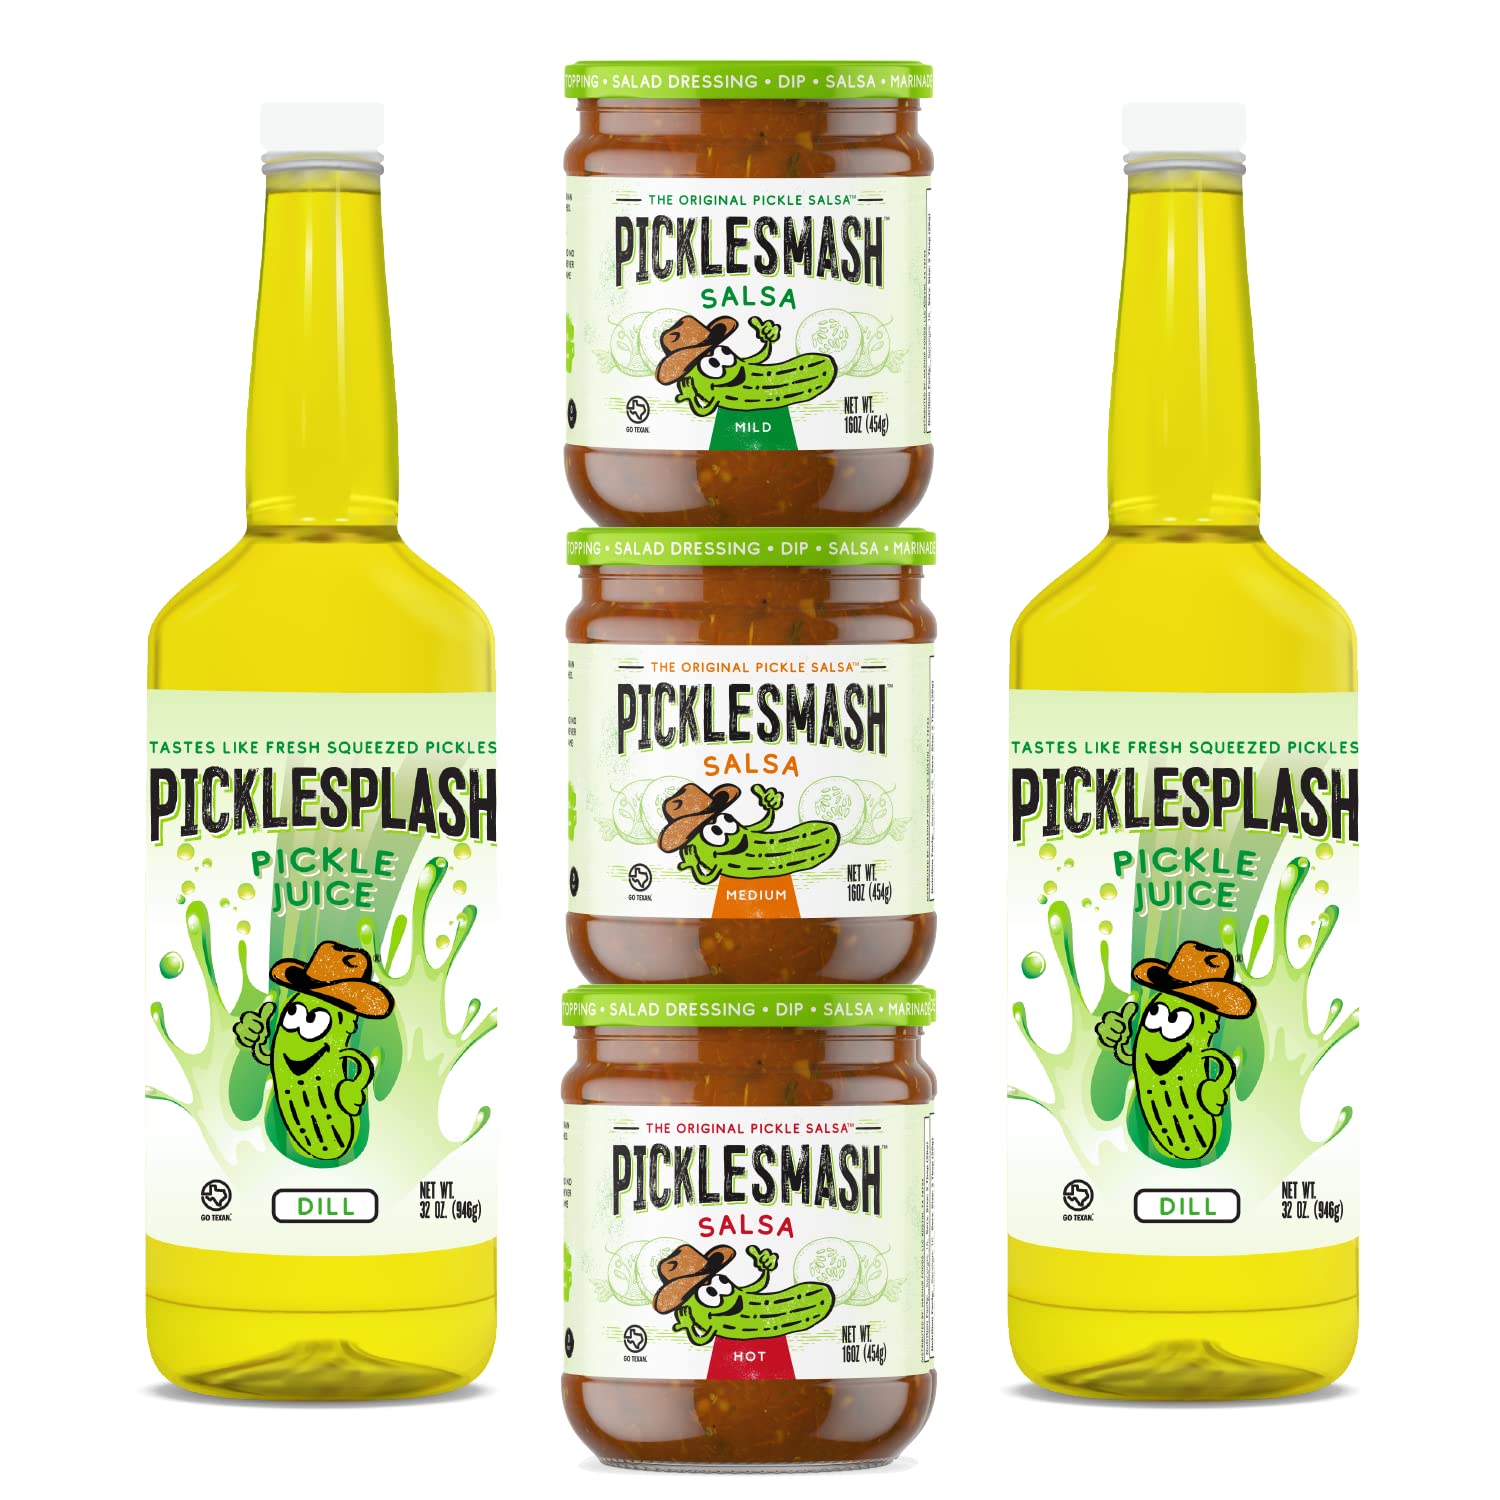 PicklePack - Sampler - 3 Pack PickleSmash Sugar Free Salsa - 2 Pack PickleSplash Pickle Beverage 32oz Per Bottle - Gluten Free, Keto, Paleo, Vegan,...